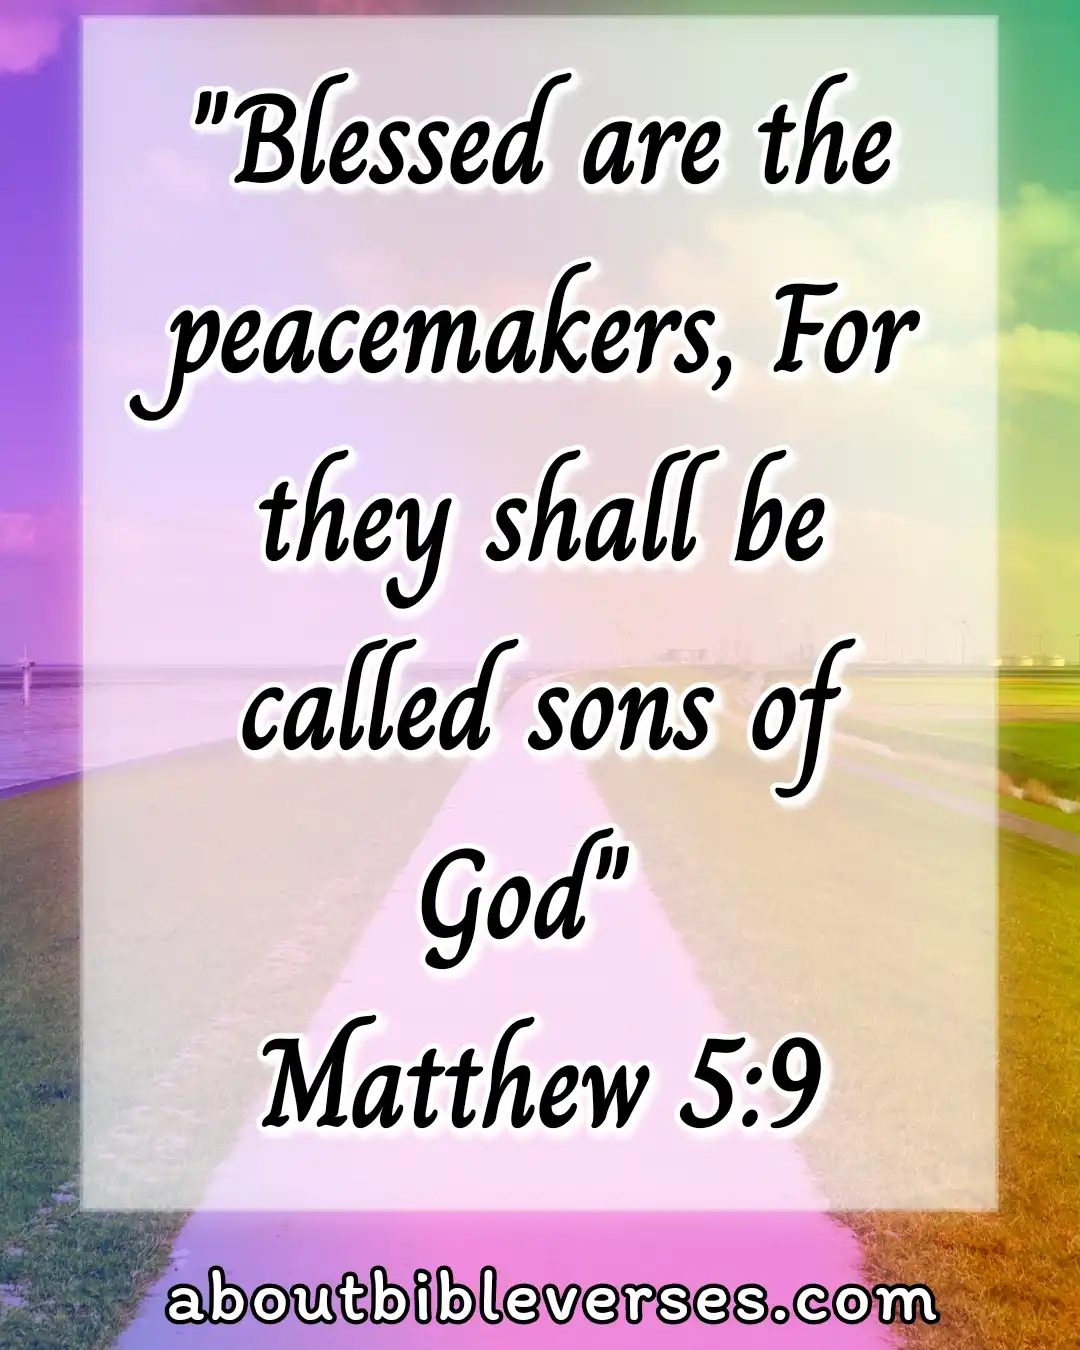 Bible Verses About Gossip And Drama (Matthew 5:9)